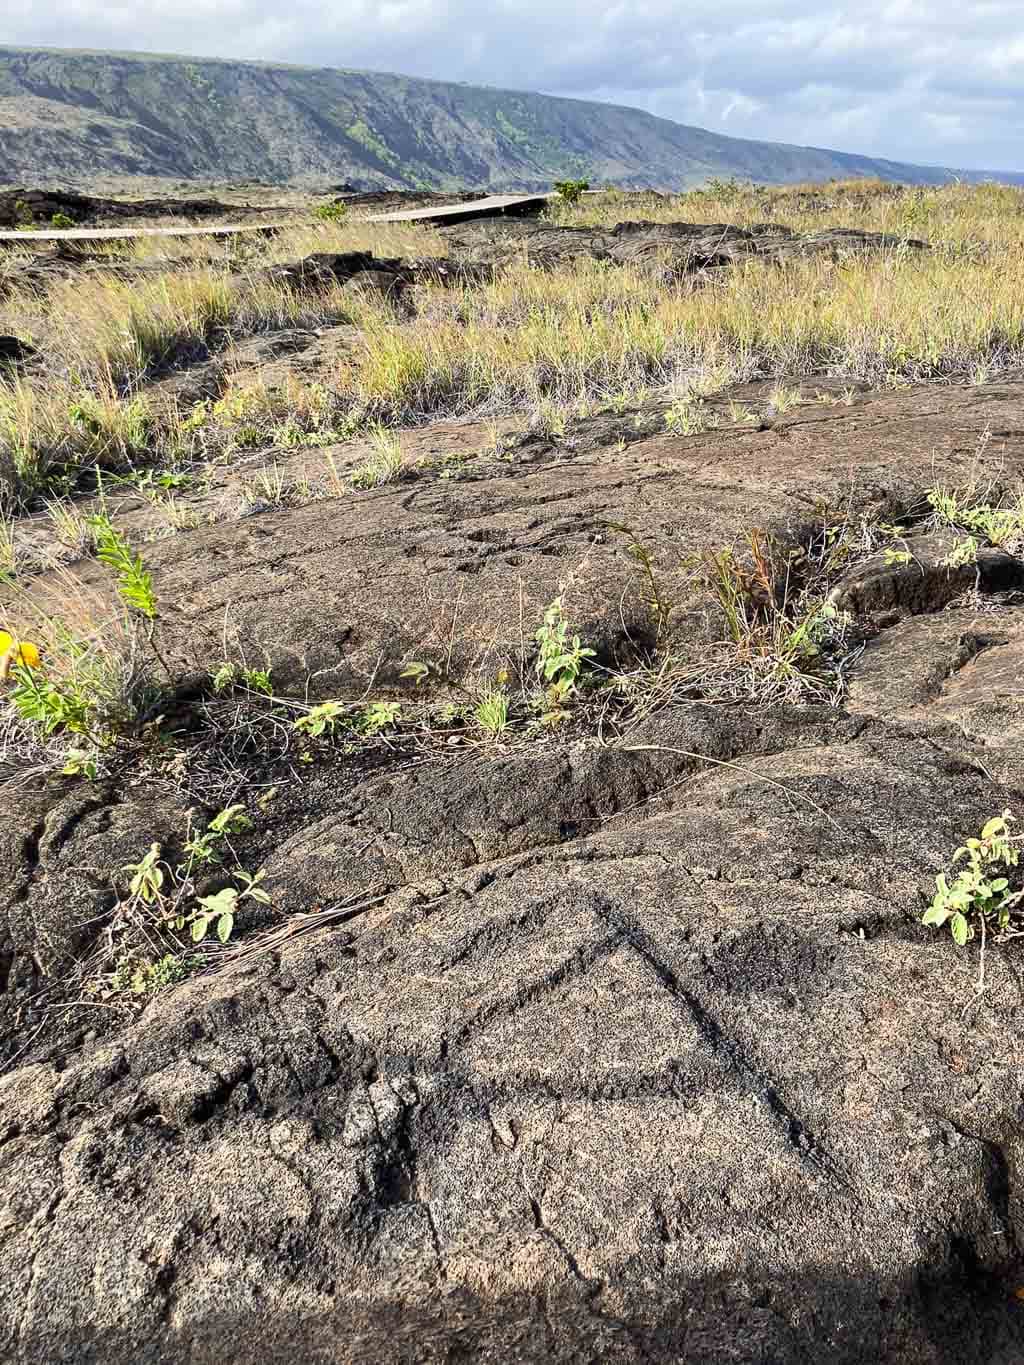 Pu‘uloa Petroglyphs Trail, Chain of Craters Road in Hawai‘i Volcanoes National Park, Hawaii